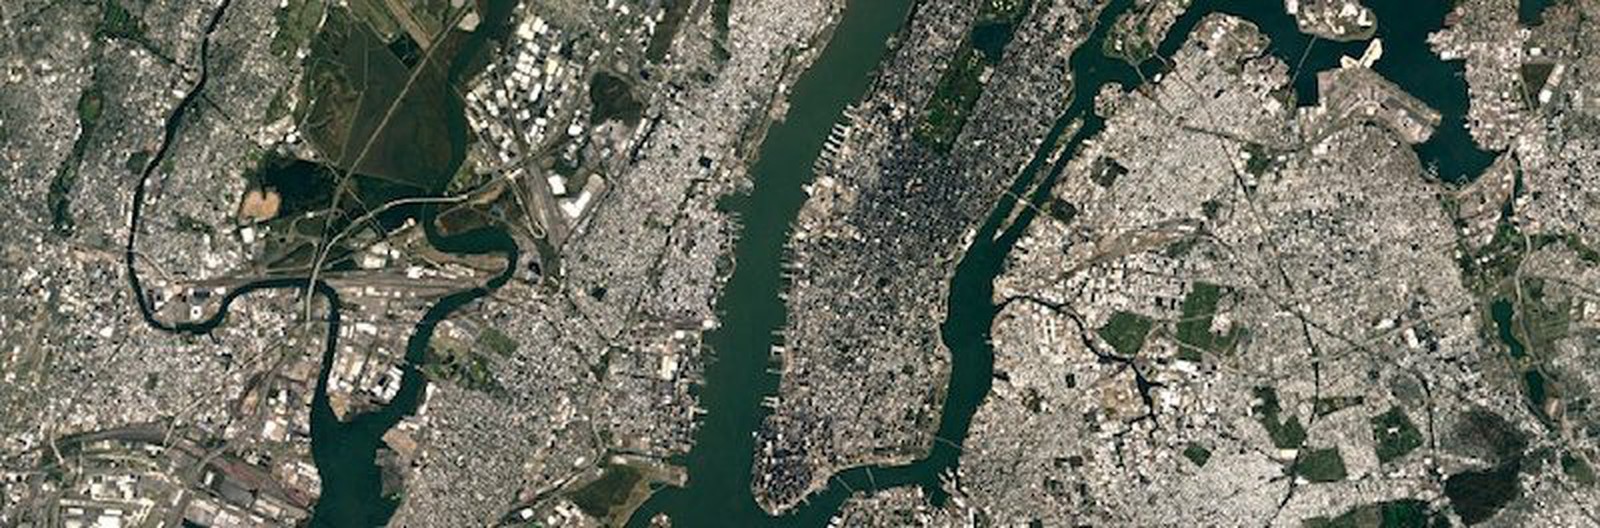 Google Maps Satellite View Gains High Definition Landsat 8 Imagery